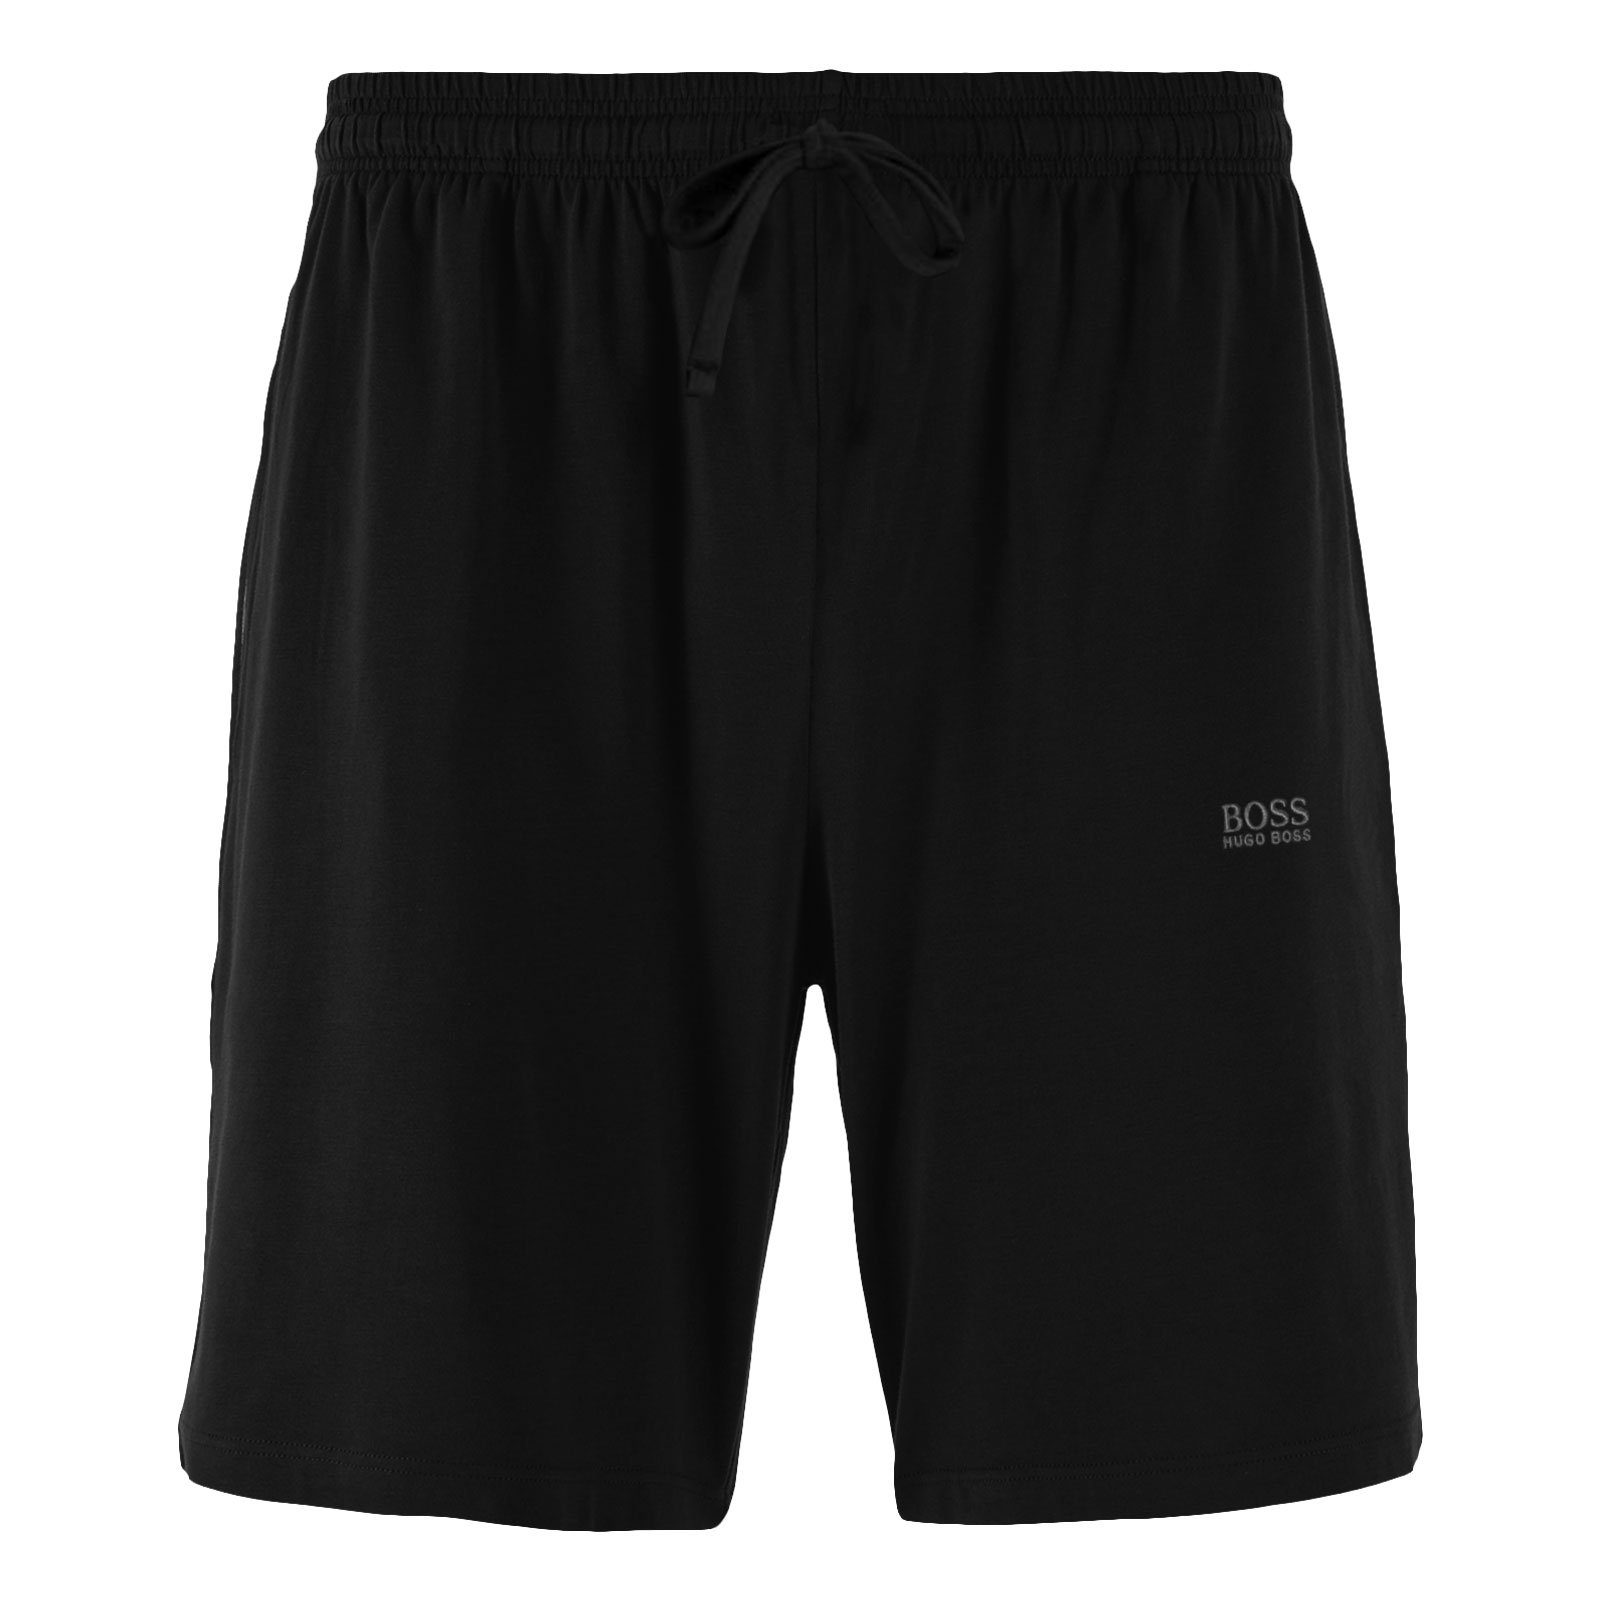 BOSS Mix Match flexiblen Zugband im Shorts & mit Pants Bund